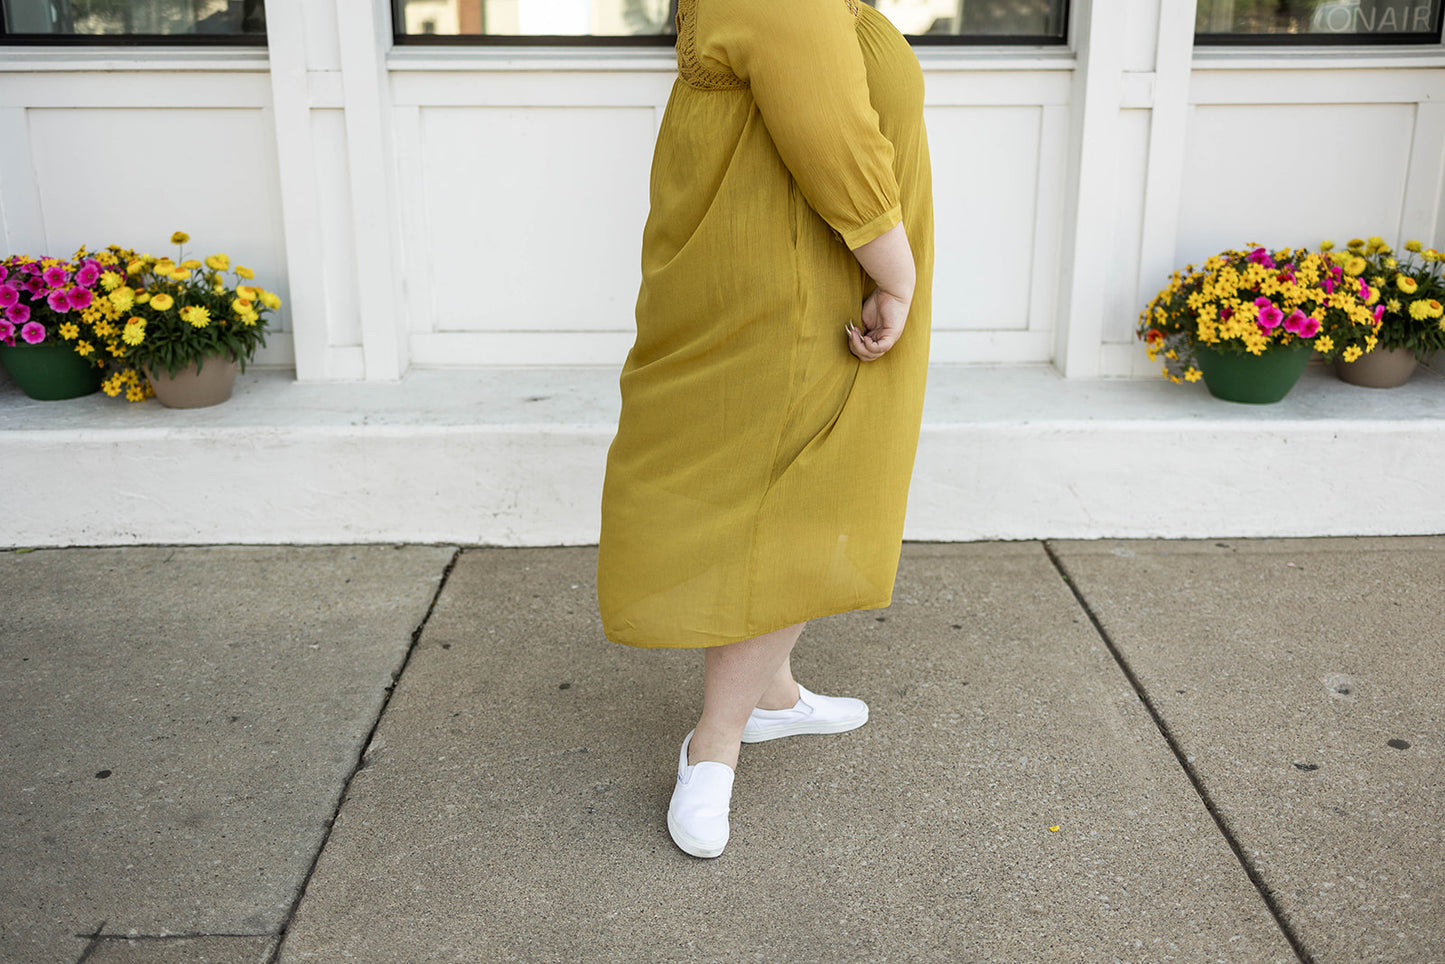 evangeline dress in yellow